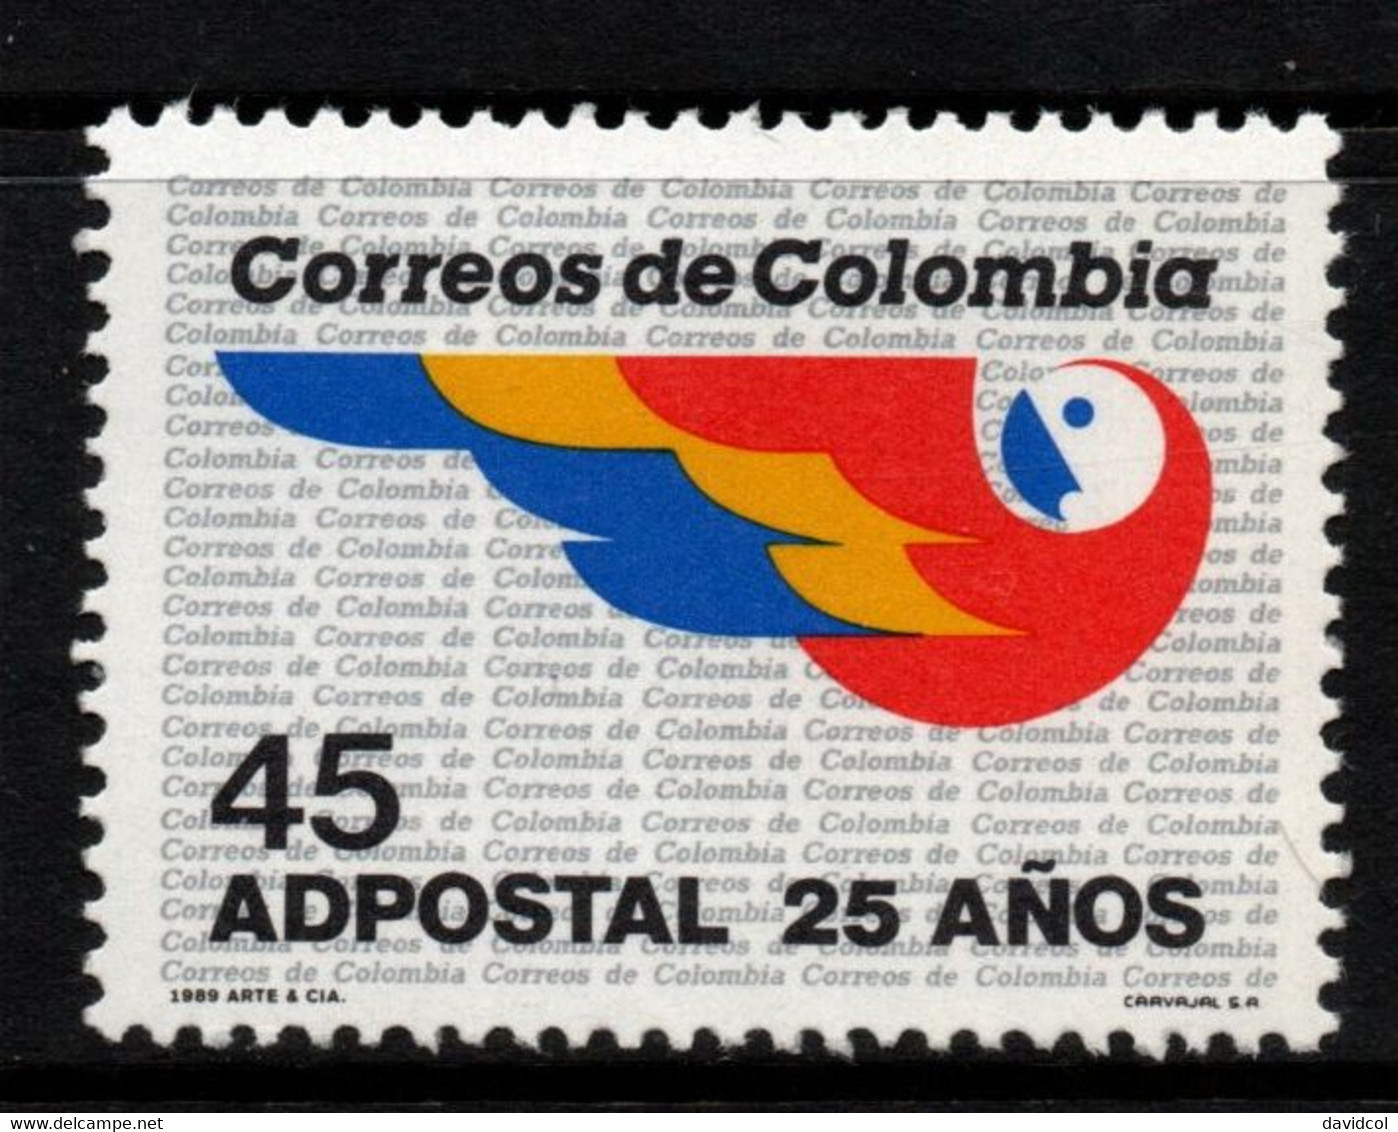 07- KOLUMBIEN - 1989 - MI#:1750 - MNH- “ADPOSTAL” NATIONAL MAIL COMPANY, 25 YEARS - Kolumbien